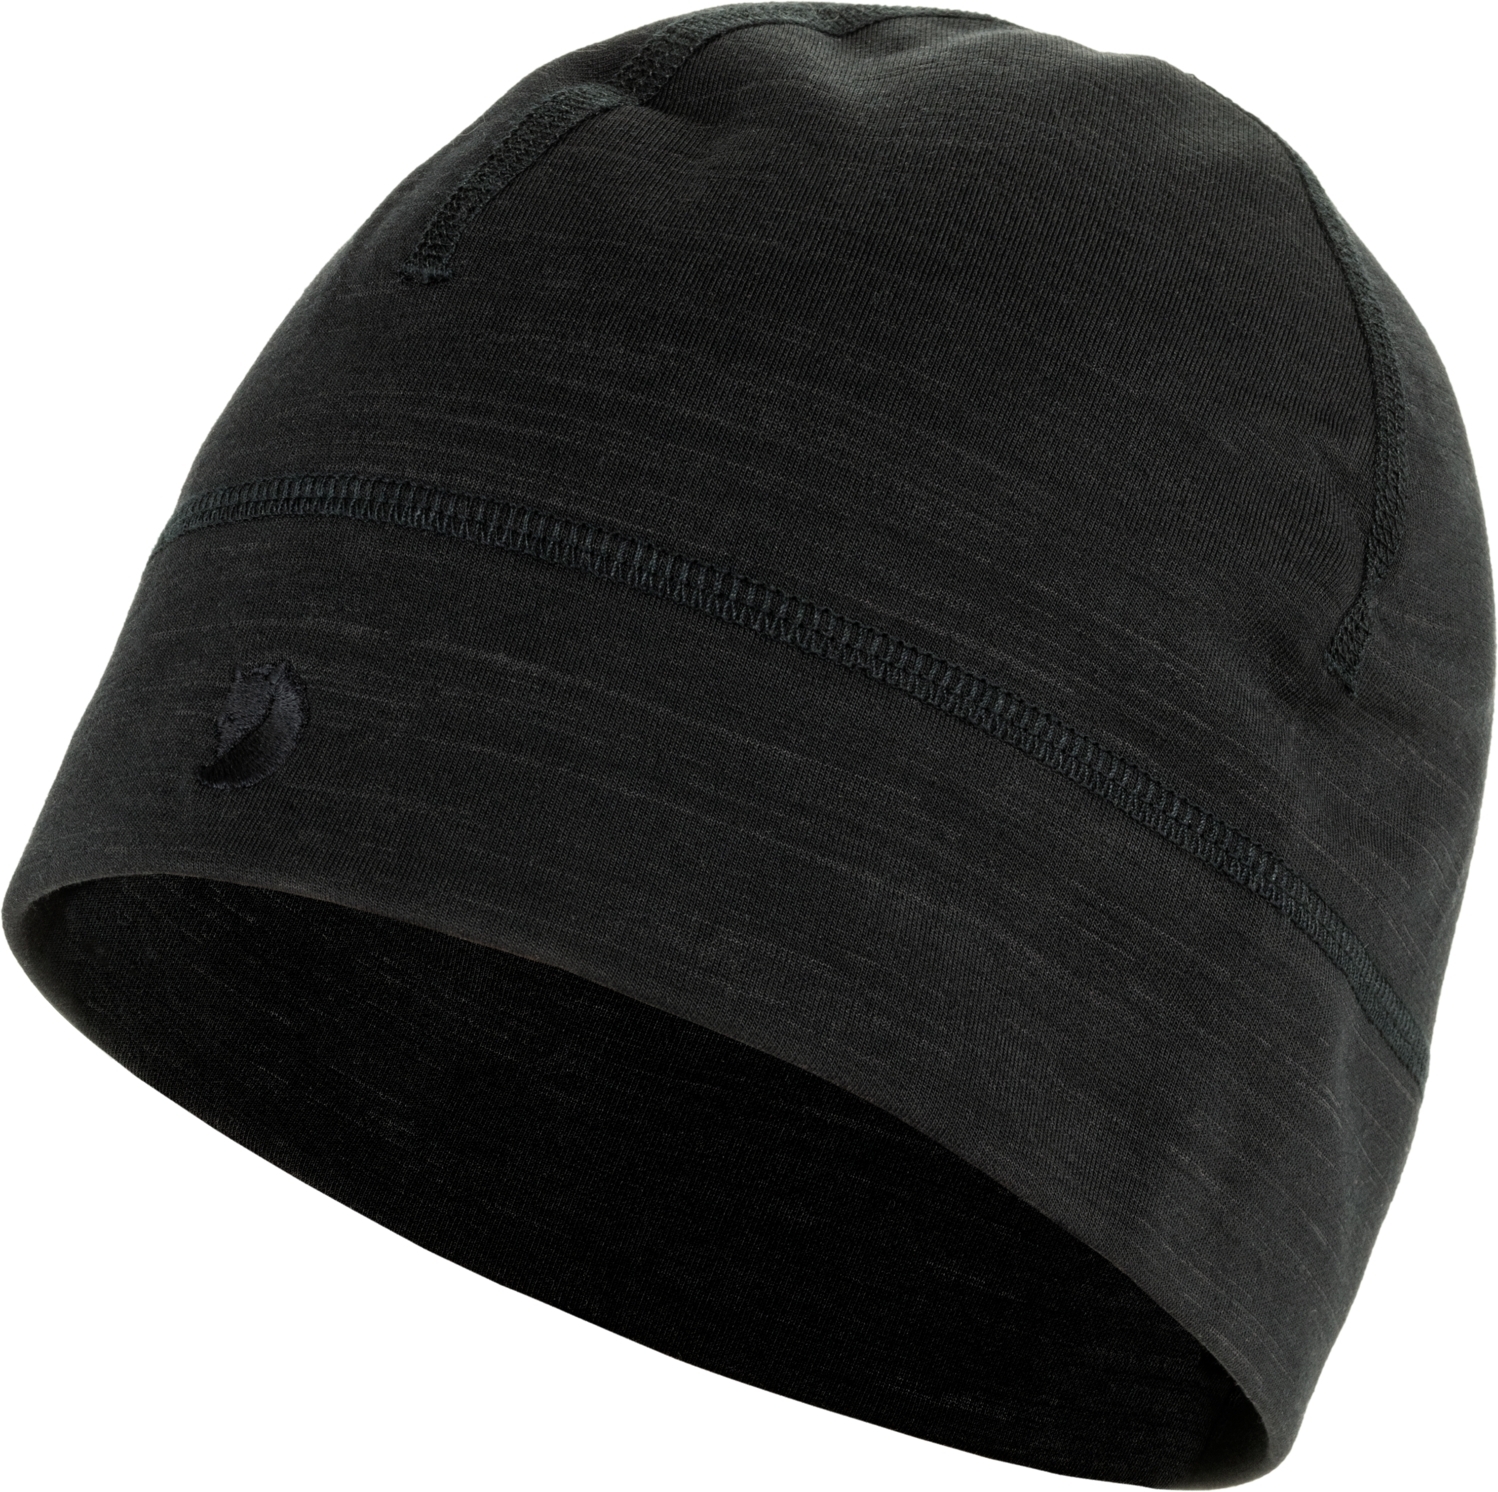 E-shop Fjallraven Keb Fleece Hat - Black S/M